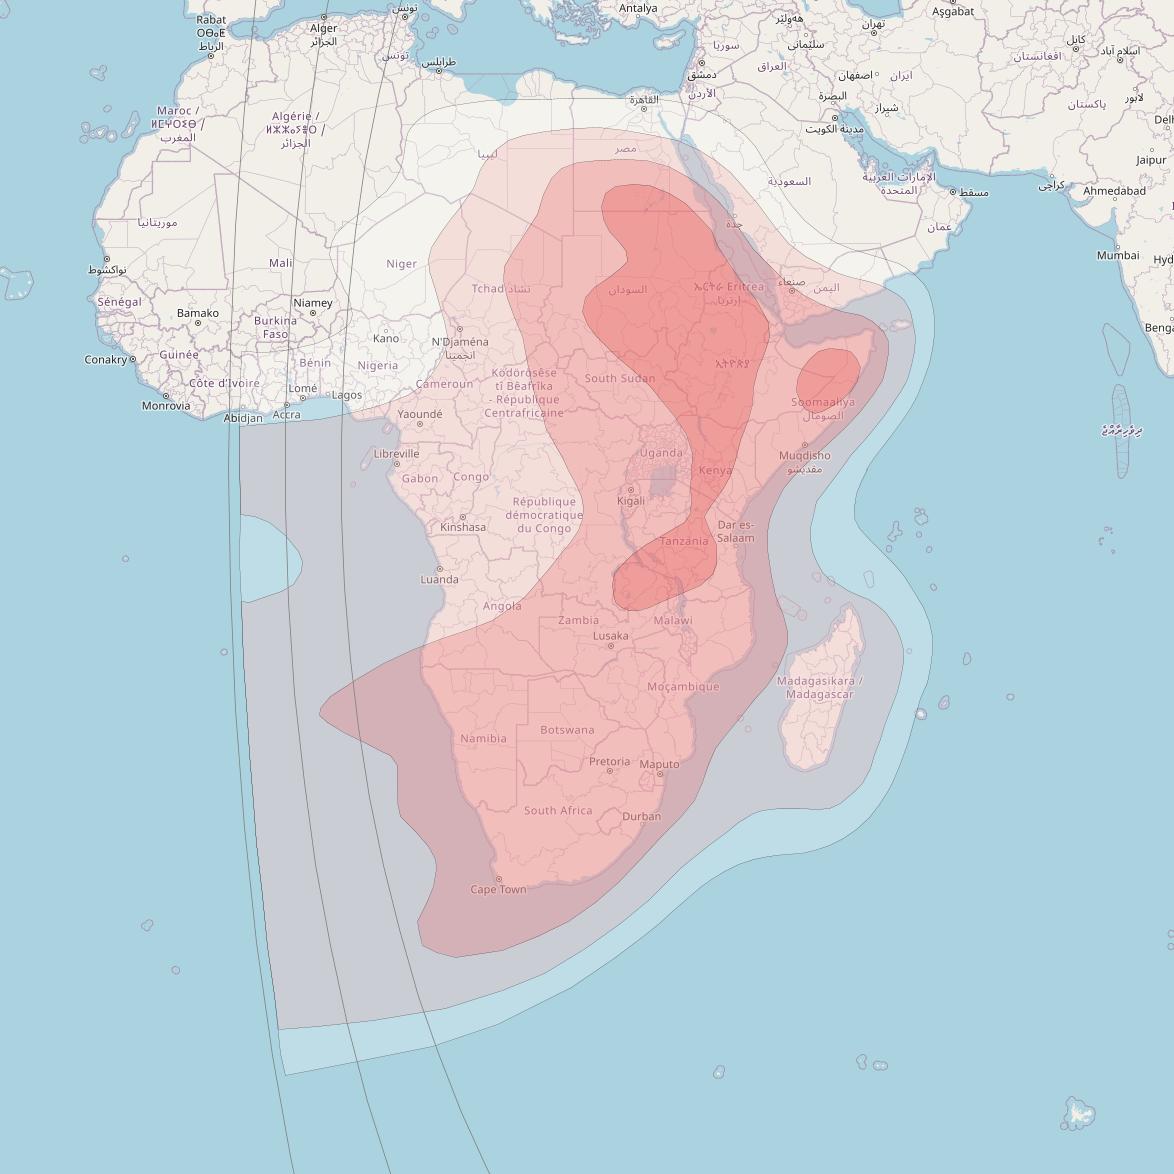 APSTAR 7 at 76° E downlink Ku-band Africa beam coverage map